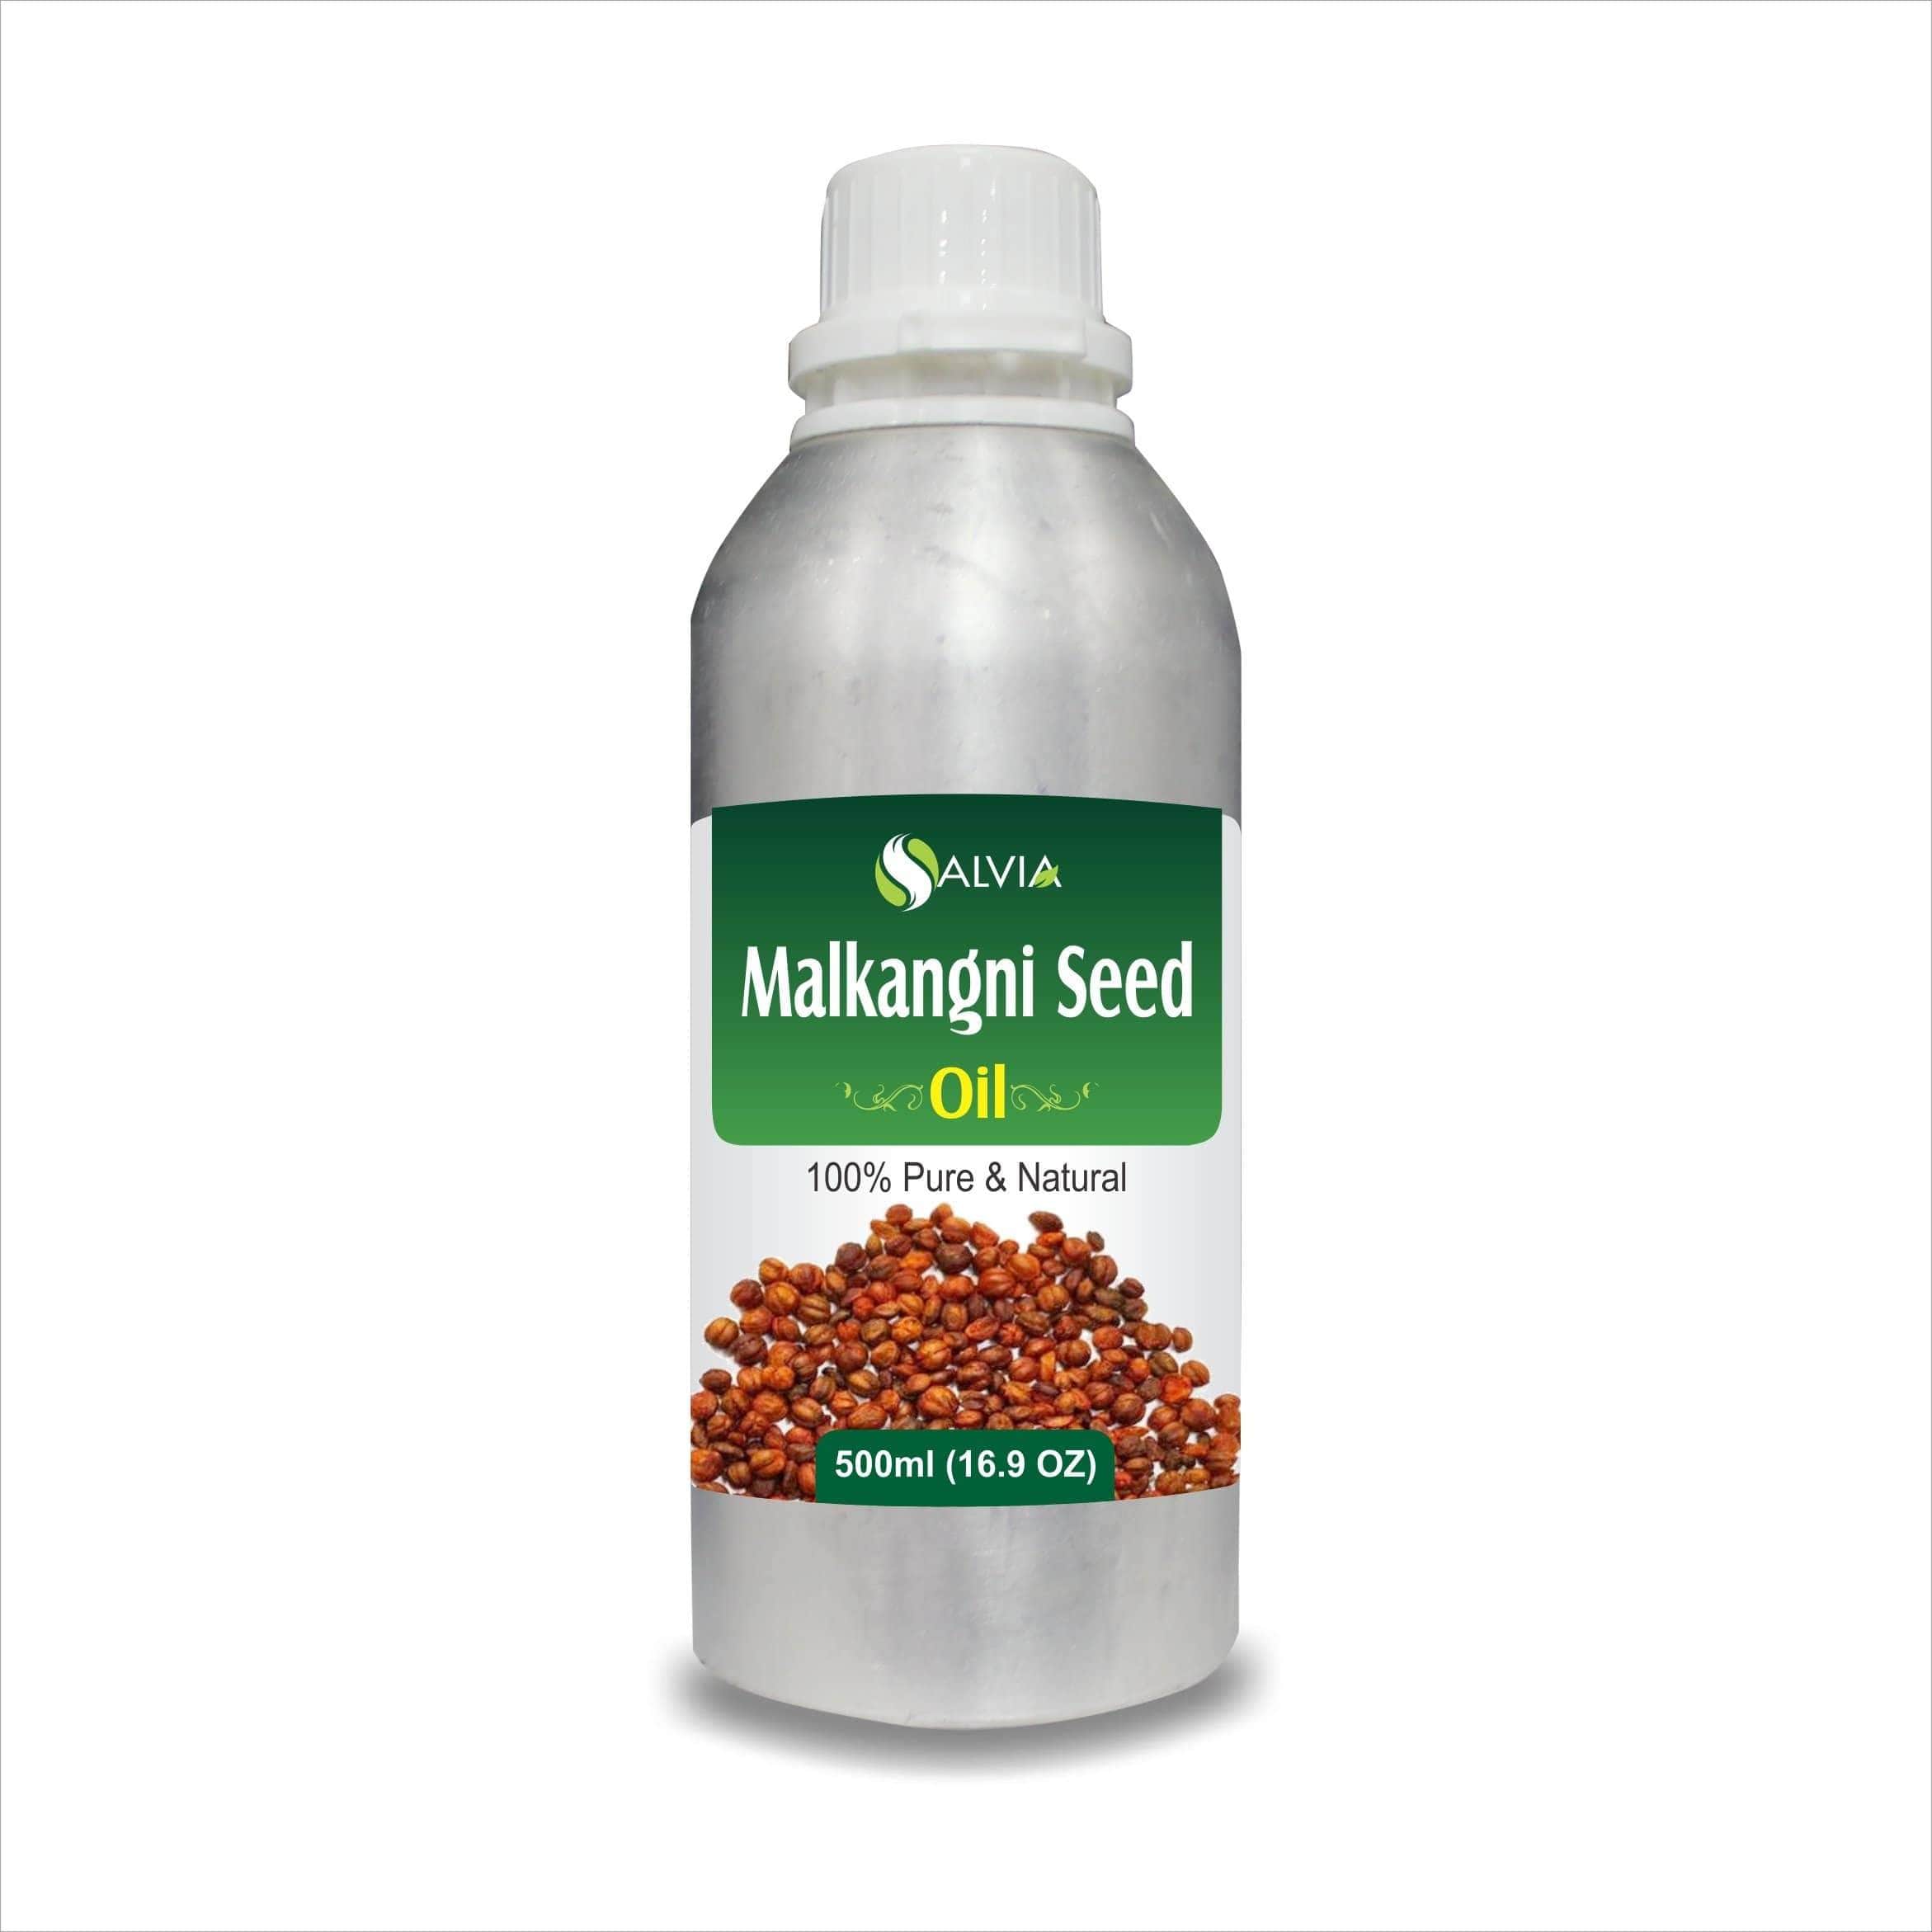 malkangni seeds benefits